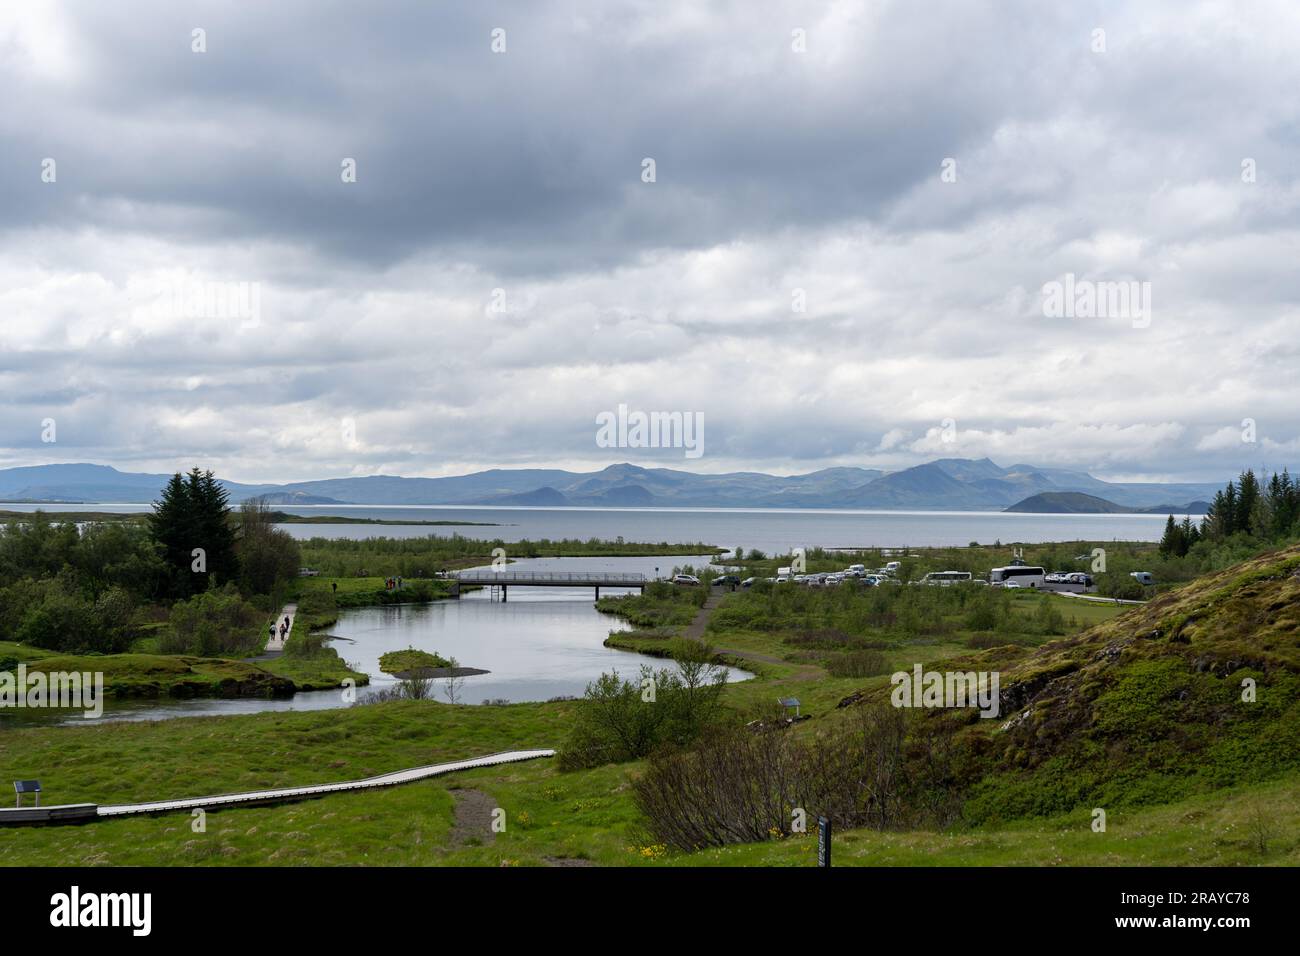 Landscape of Thingvellir rift valley of the mid Atlantic ridge and Lake Thingvallavatn in Iceland Stock Photo